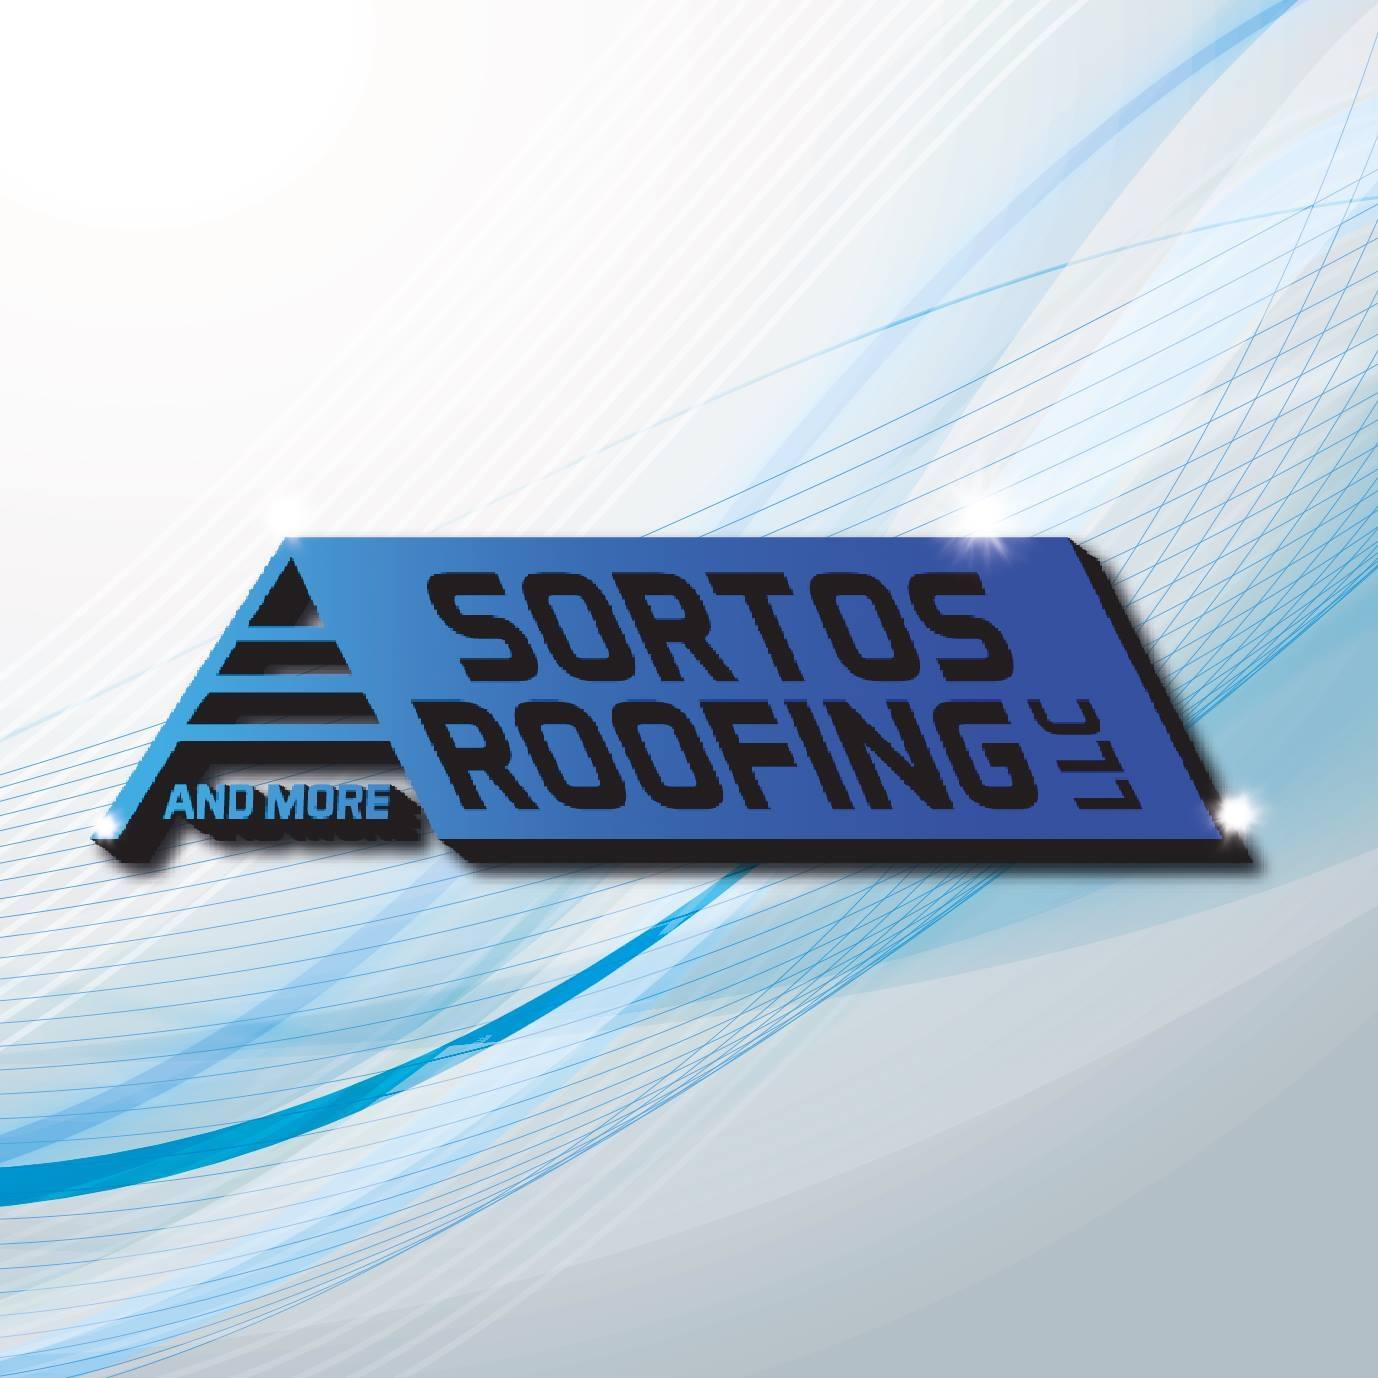 Sortos Roofing LLC